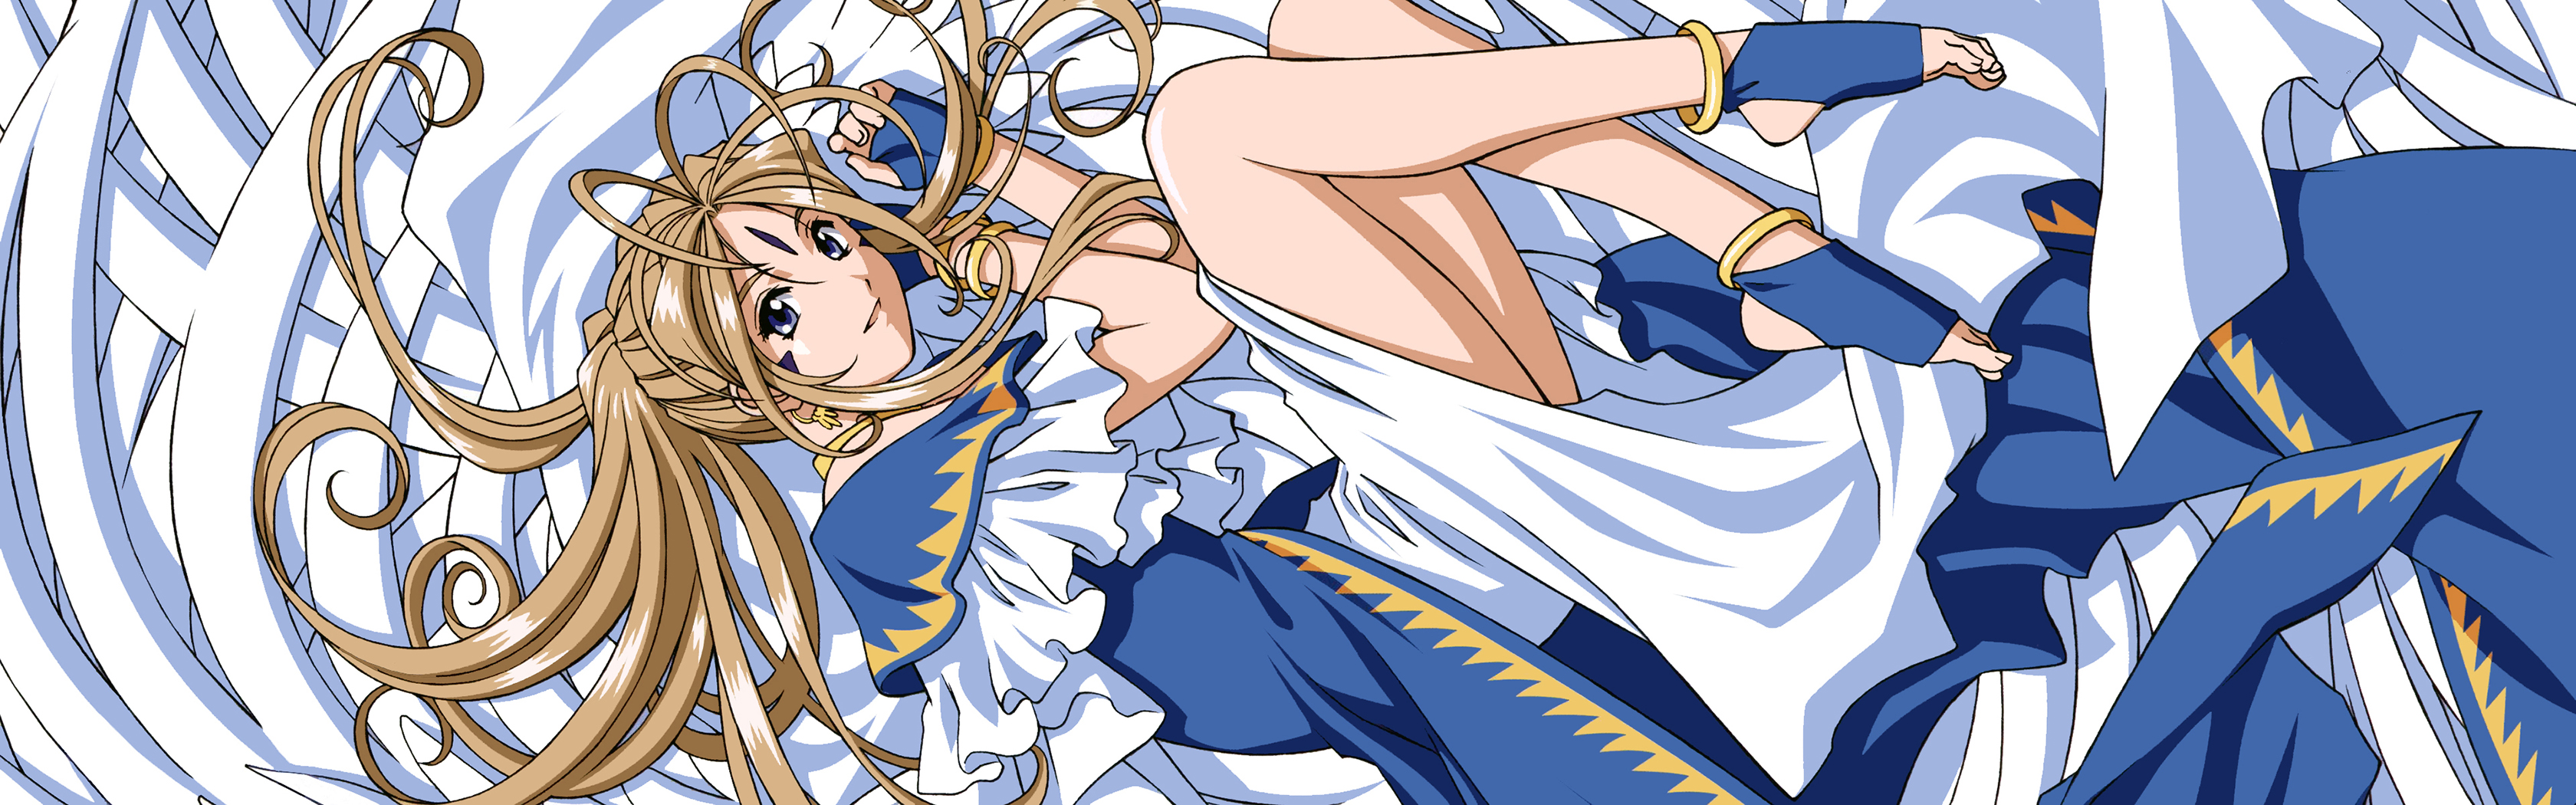 Anime Ah! My Goddess HD Wallpaper | Background Image